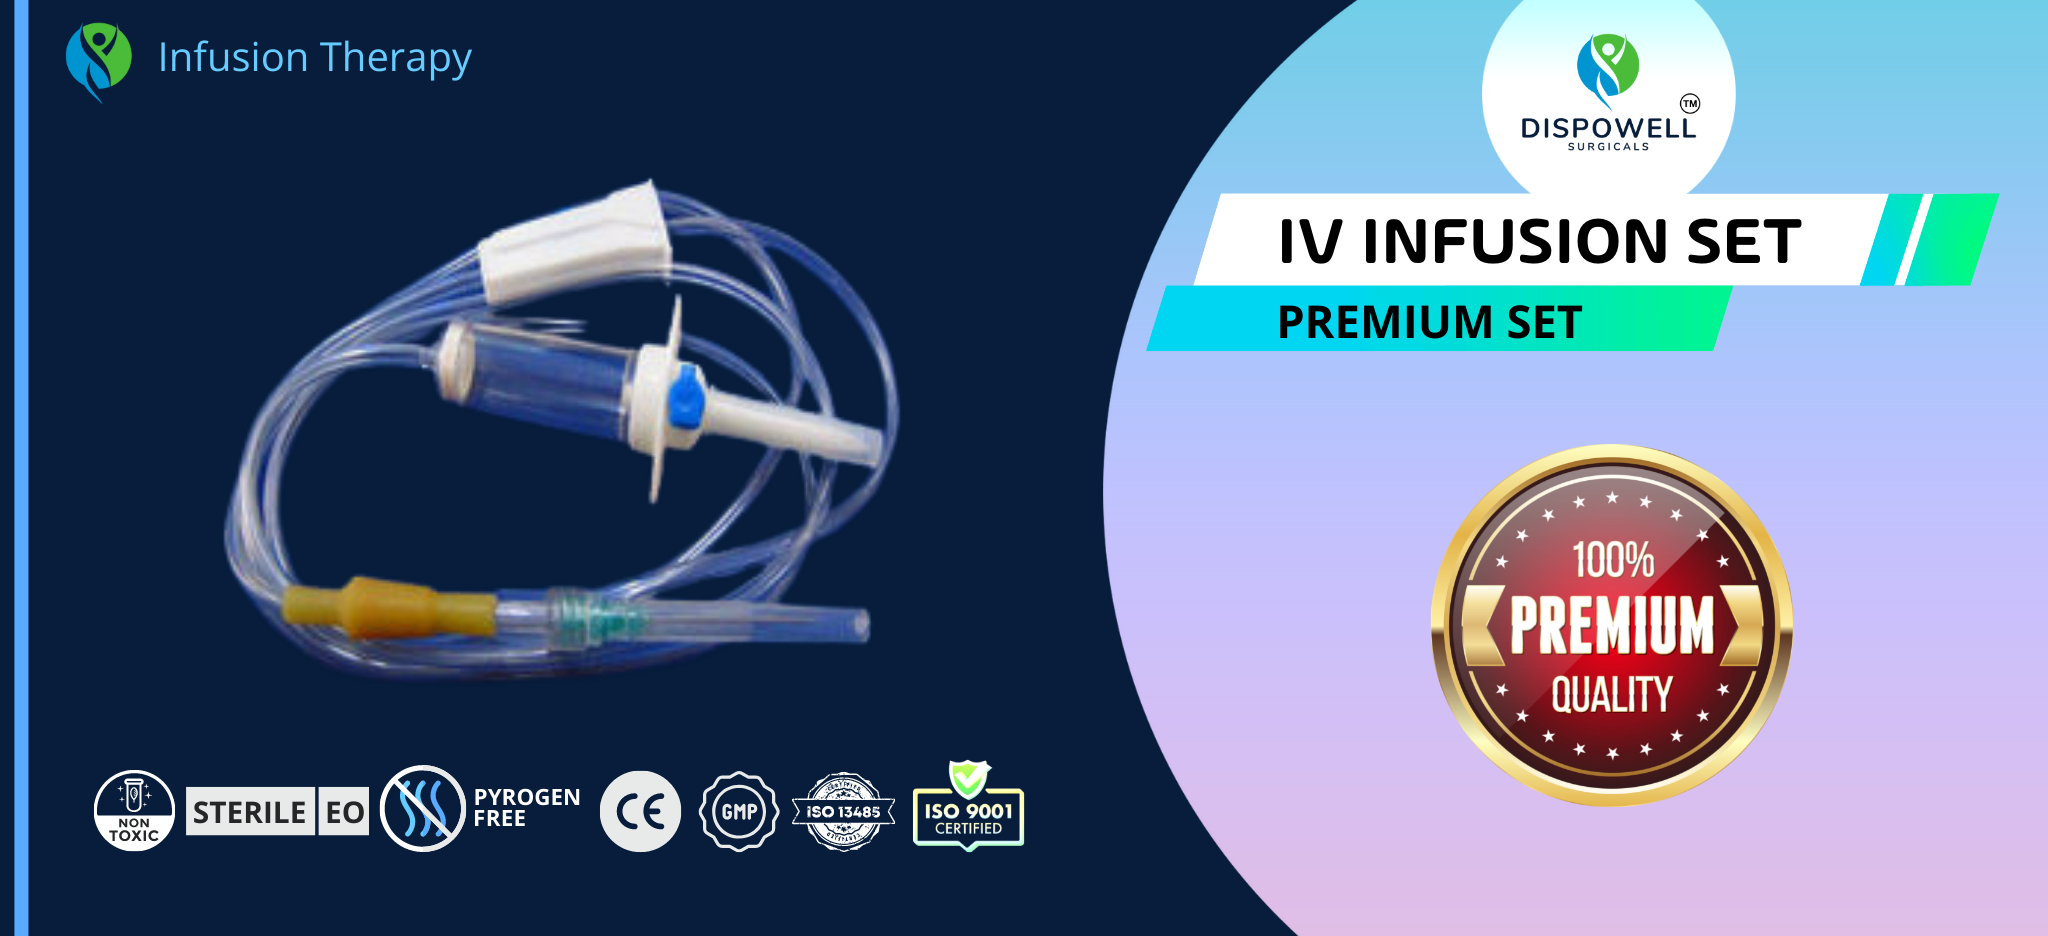 Premium IV Set infusion set manufacturer and supplier